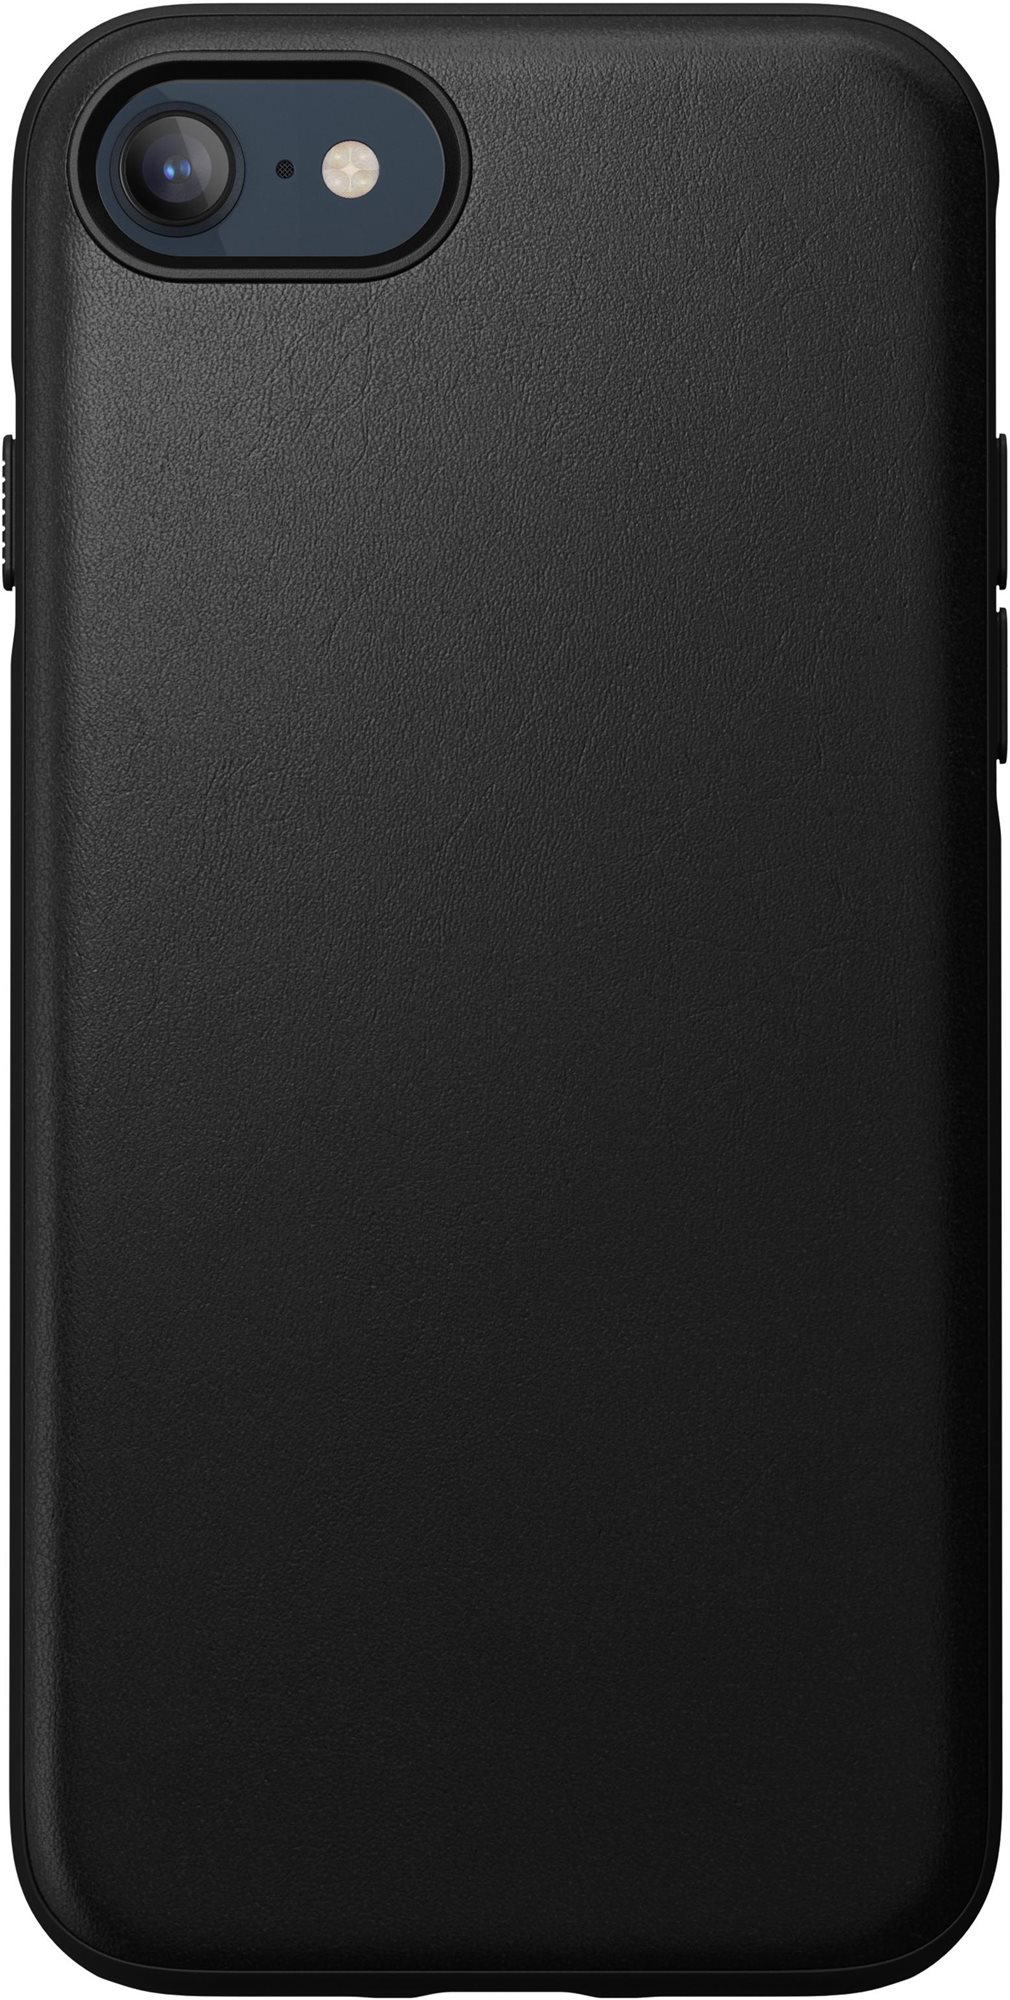 Nomad Modern Leather Case Black iPhone SE